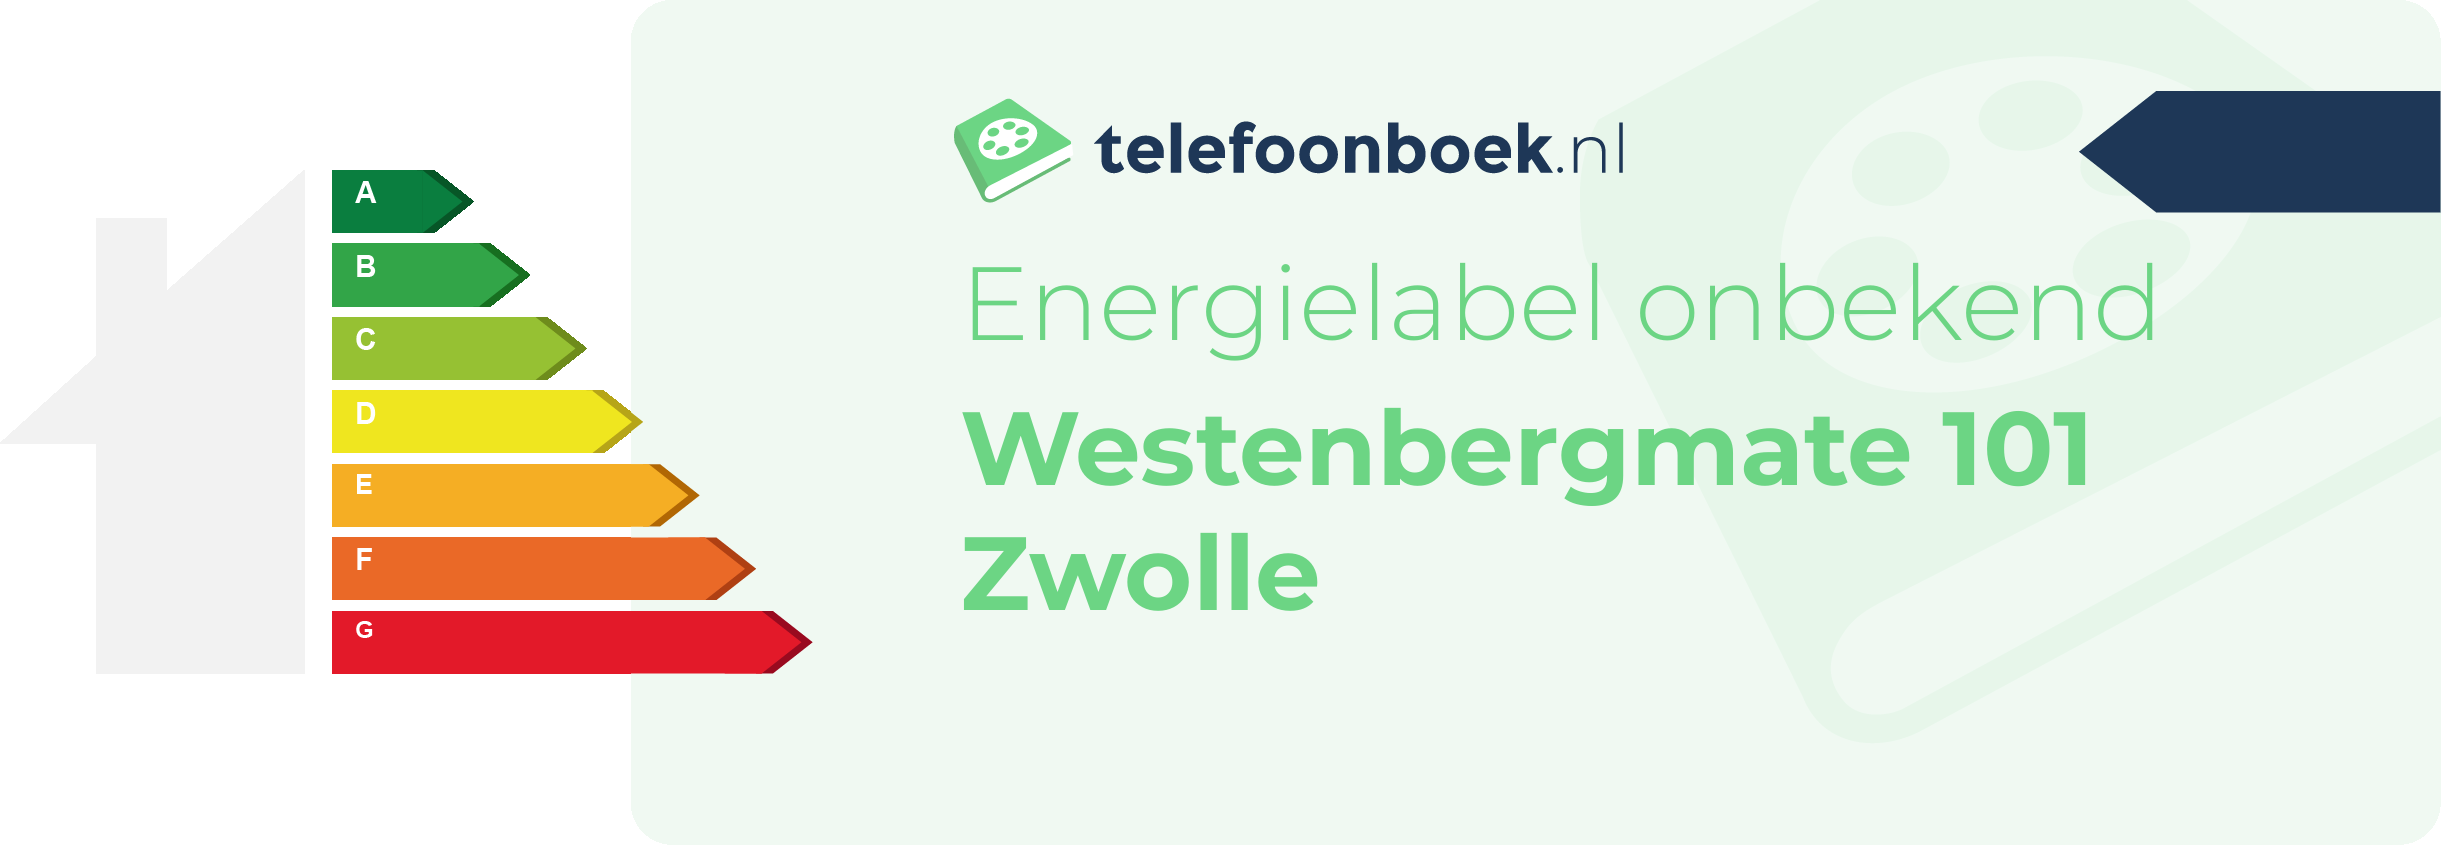 Energielabel Westenbergmate 101 Zwolle